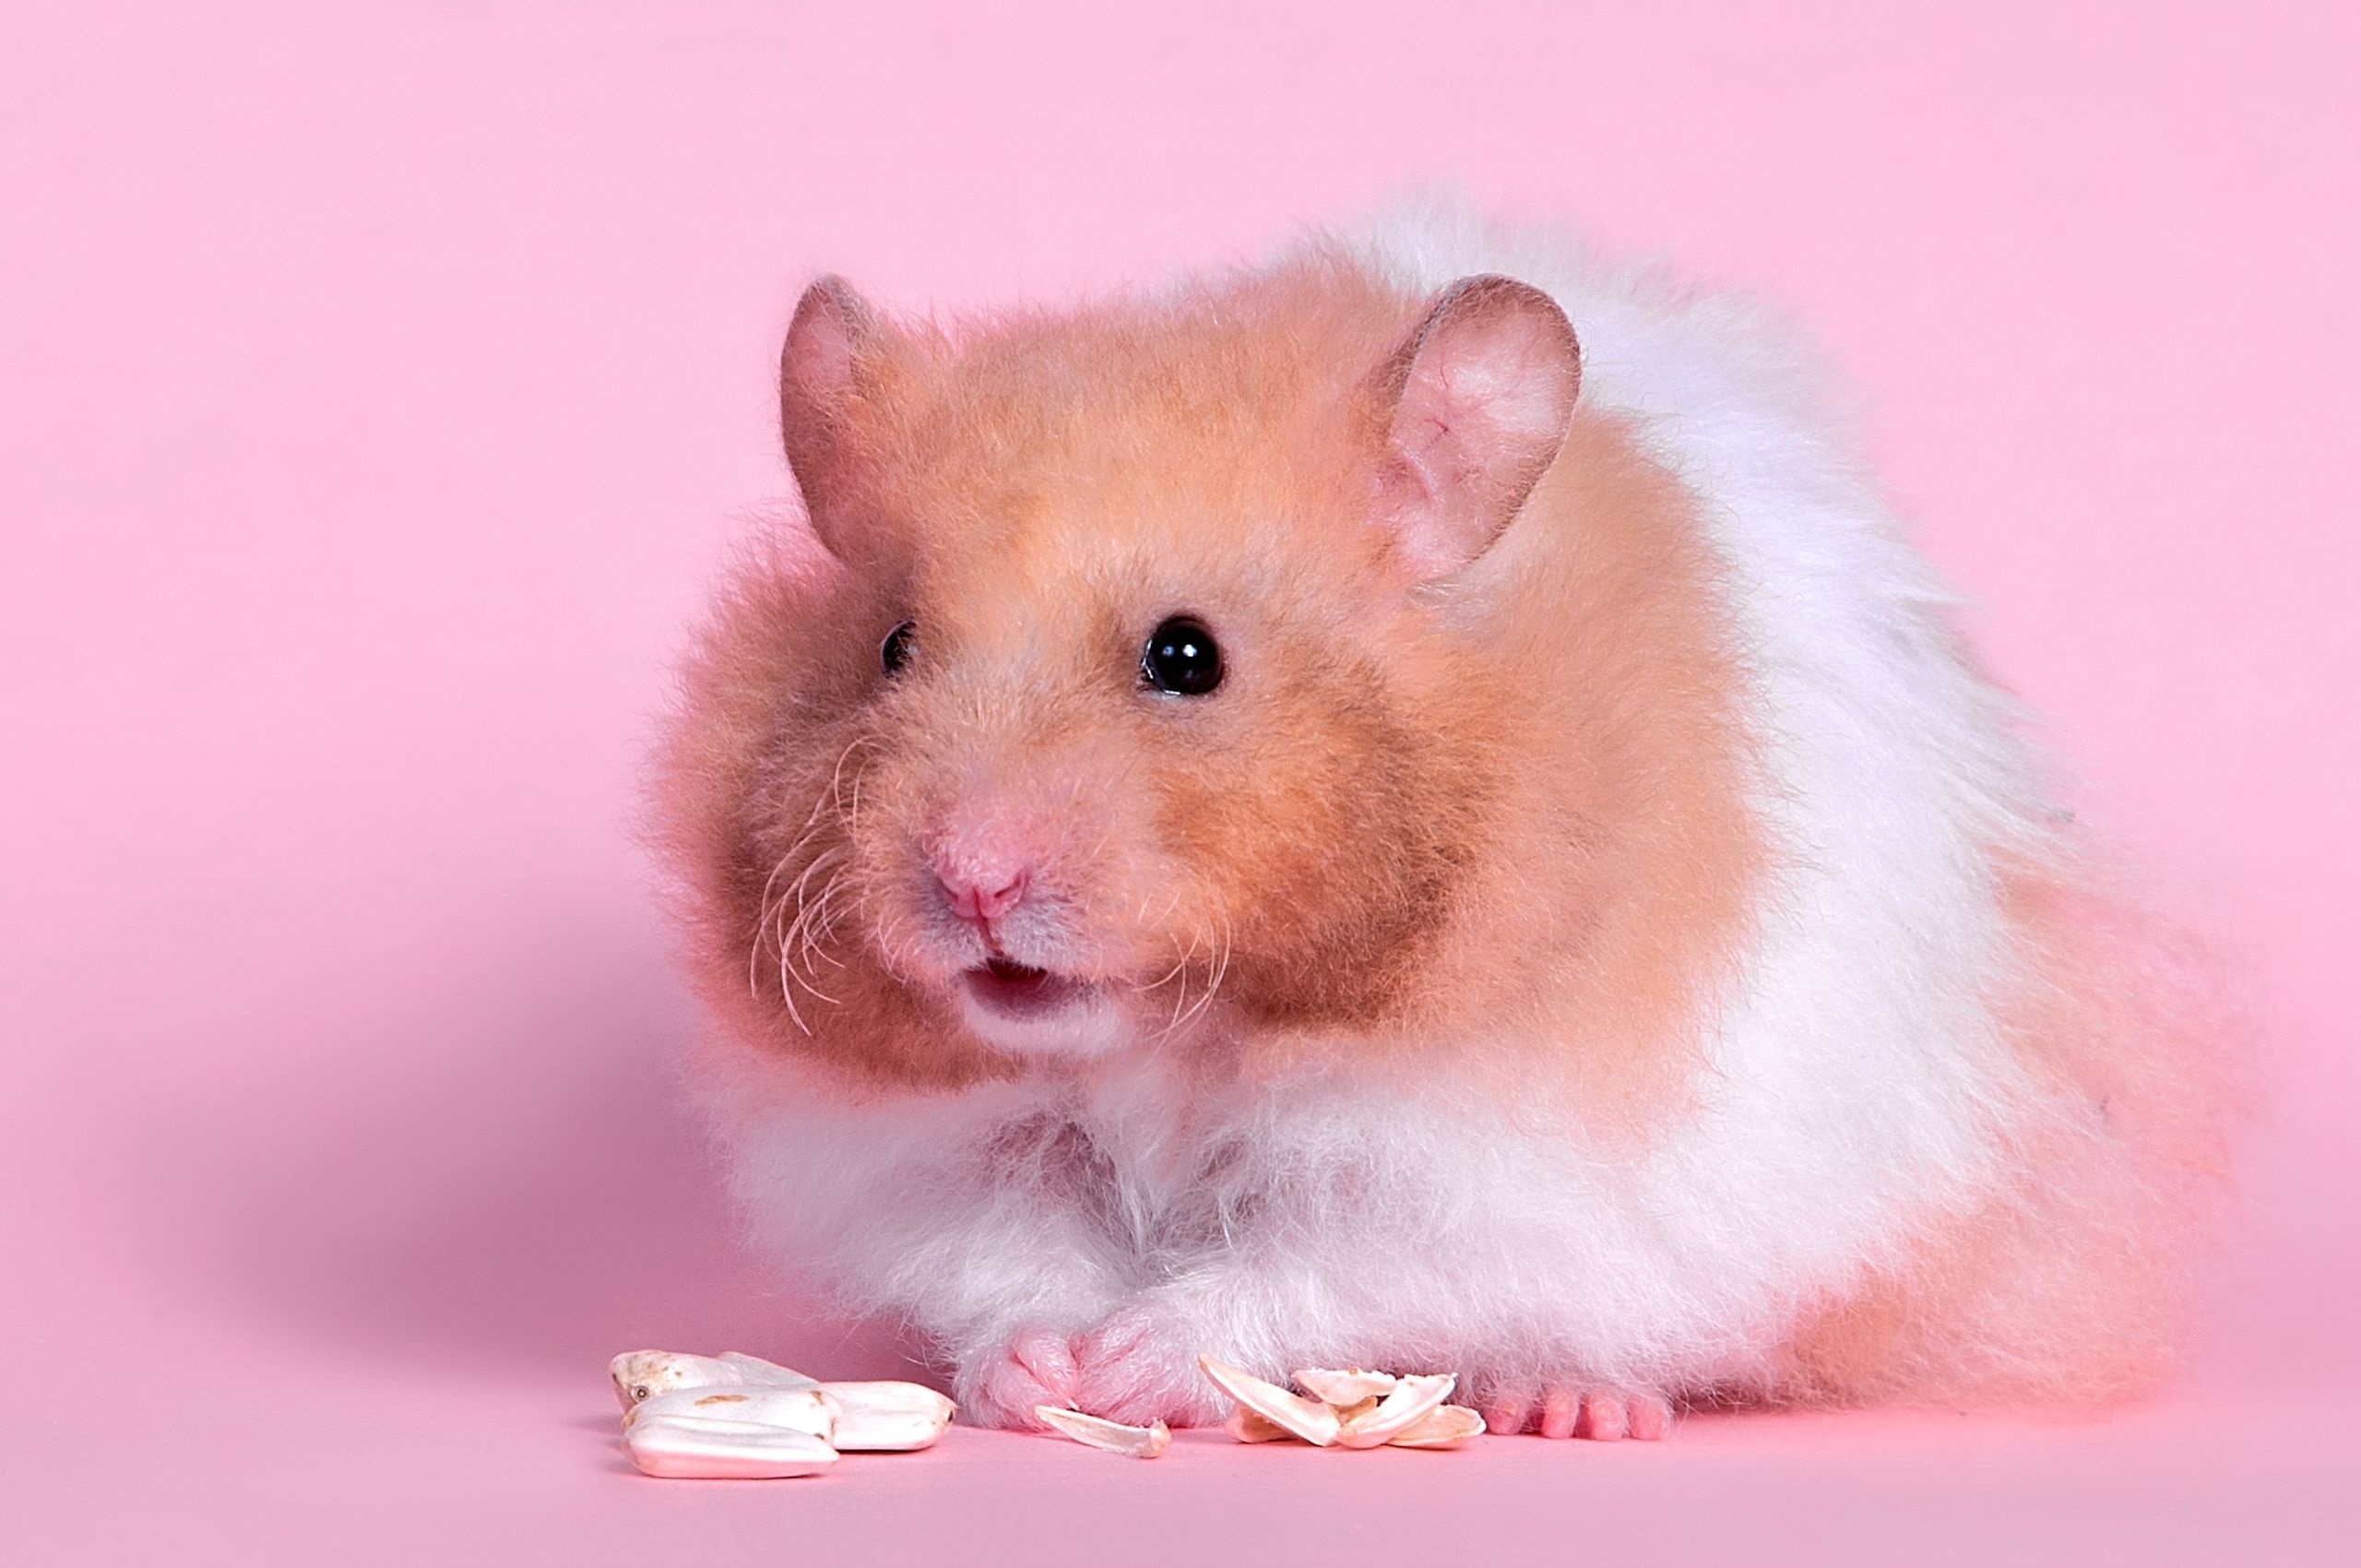 A hamster eats seeds